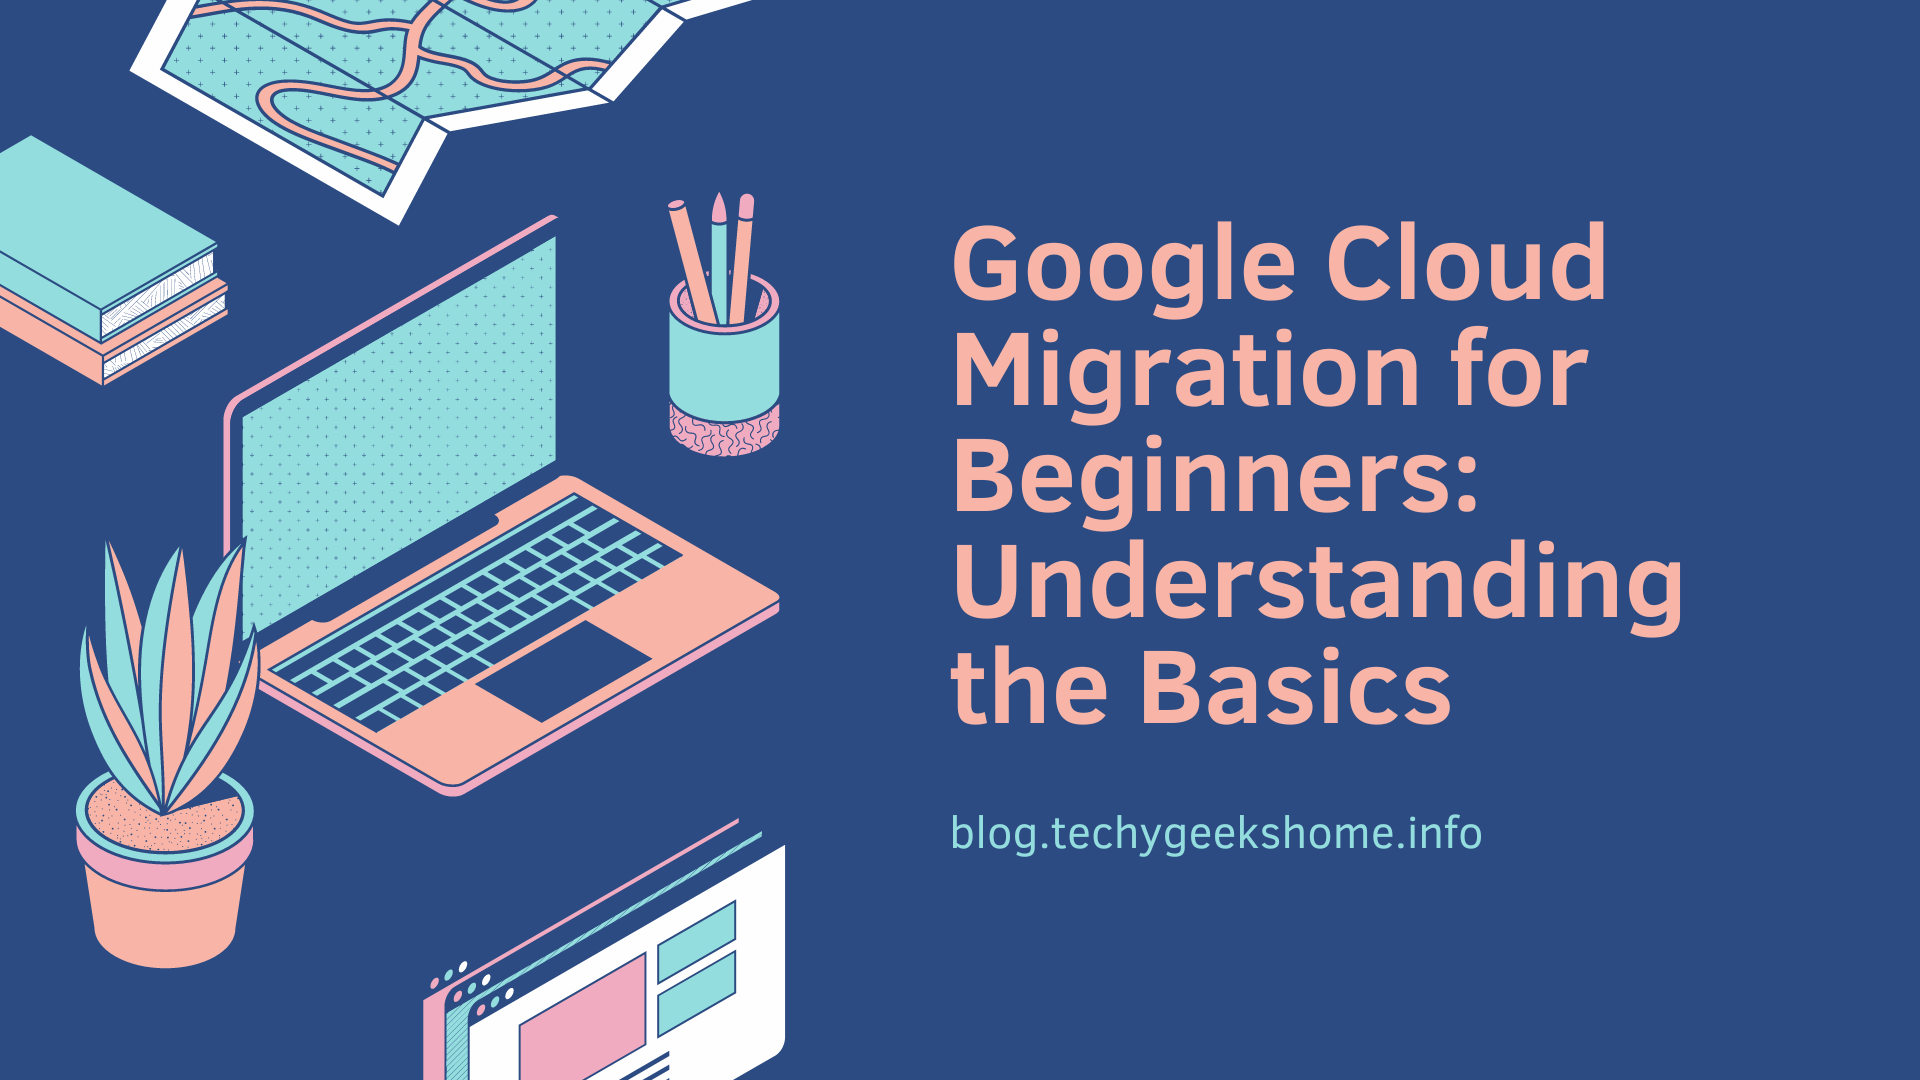 Google Cloud Migration for Beginners: Understanding the Basics